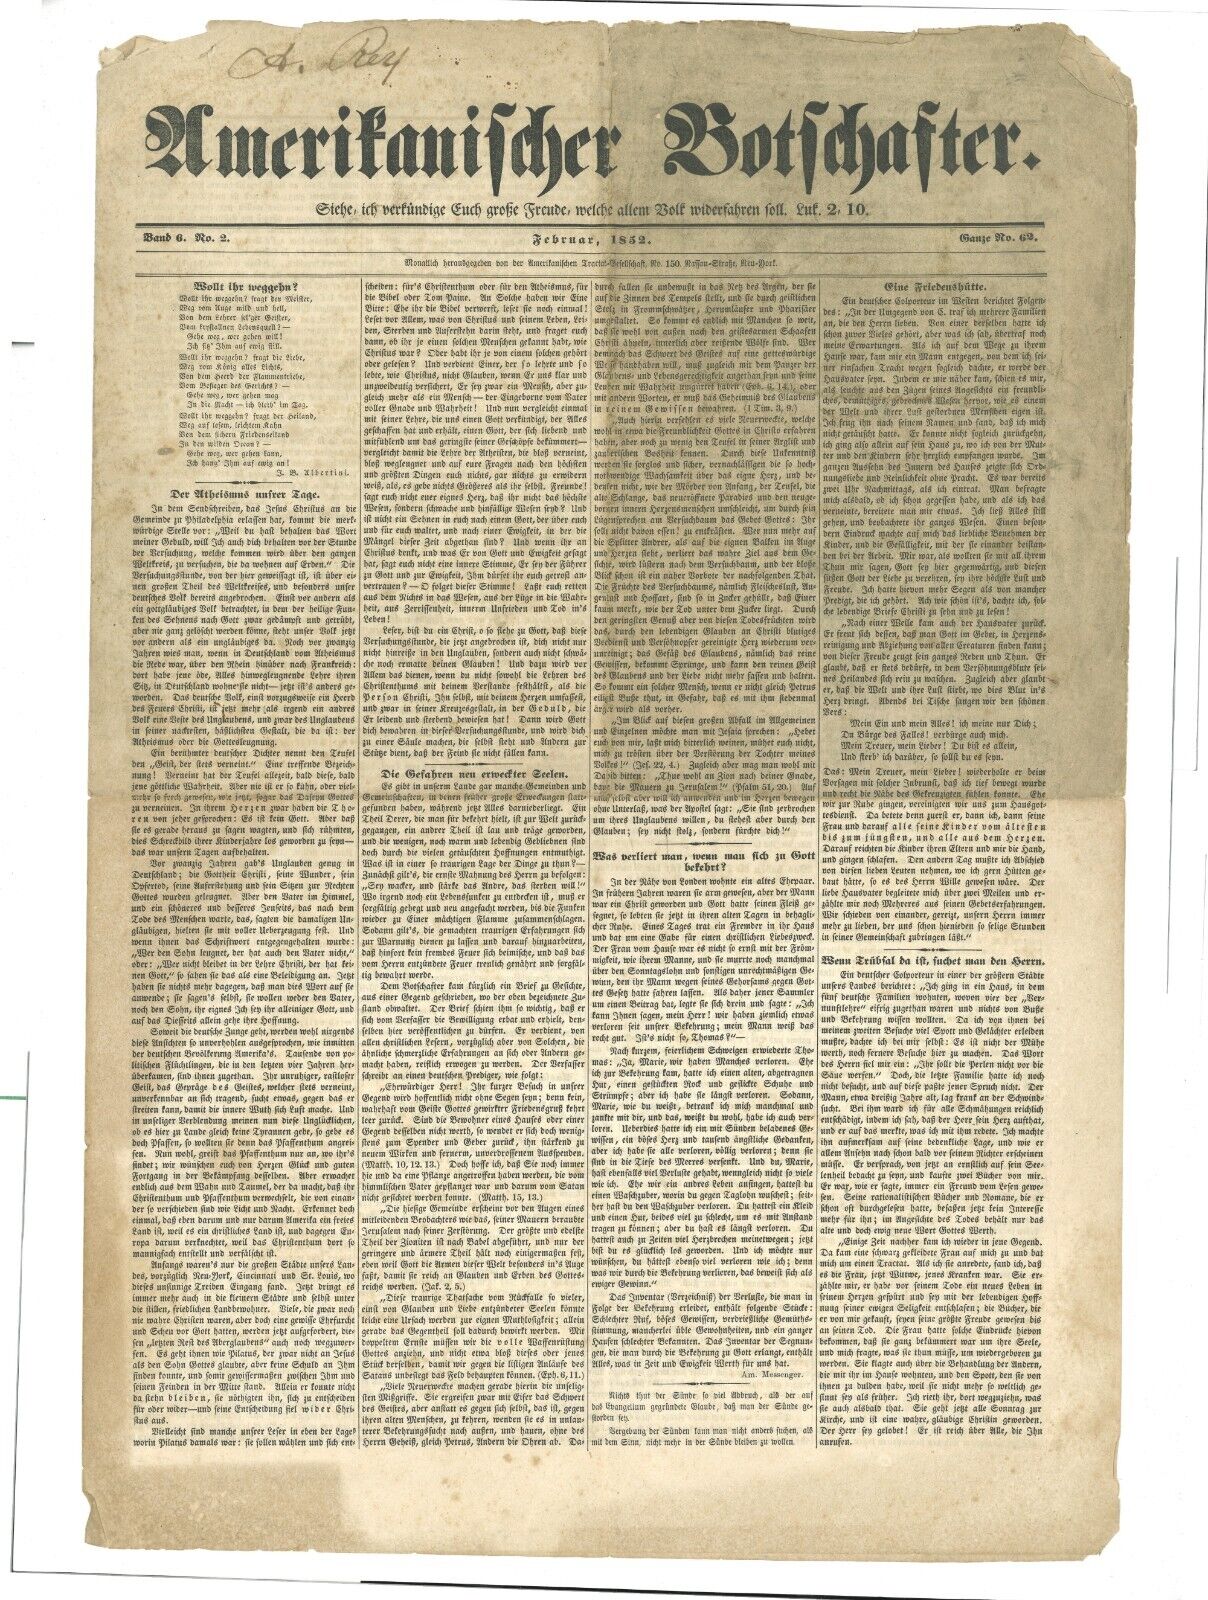 German Newspaper New York 1852